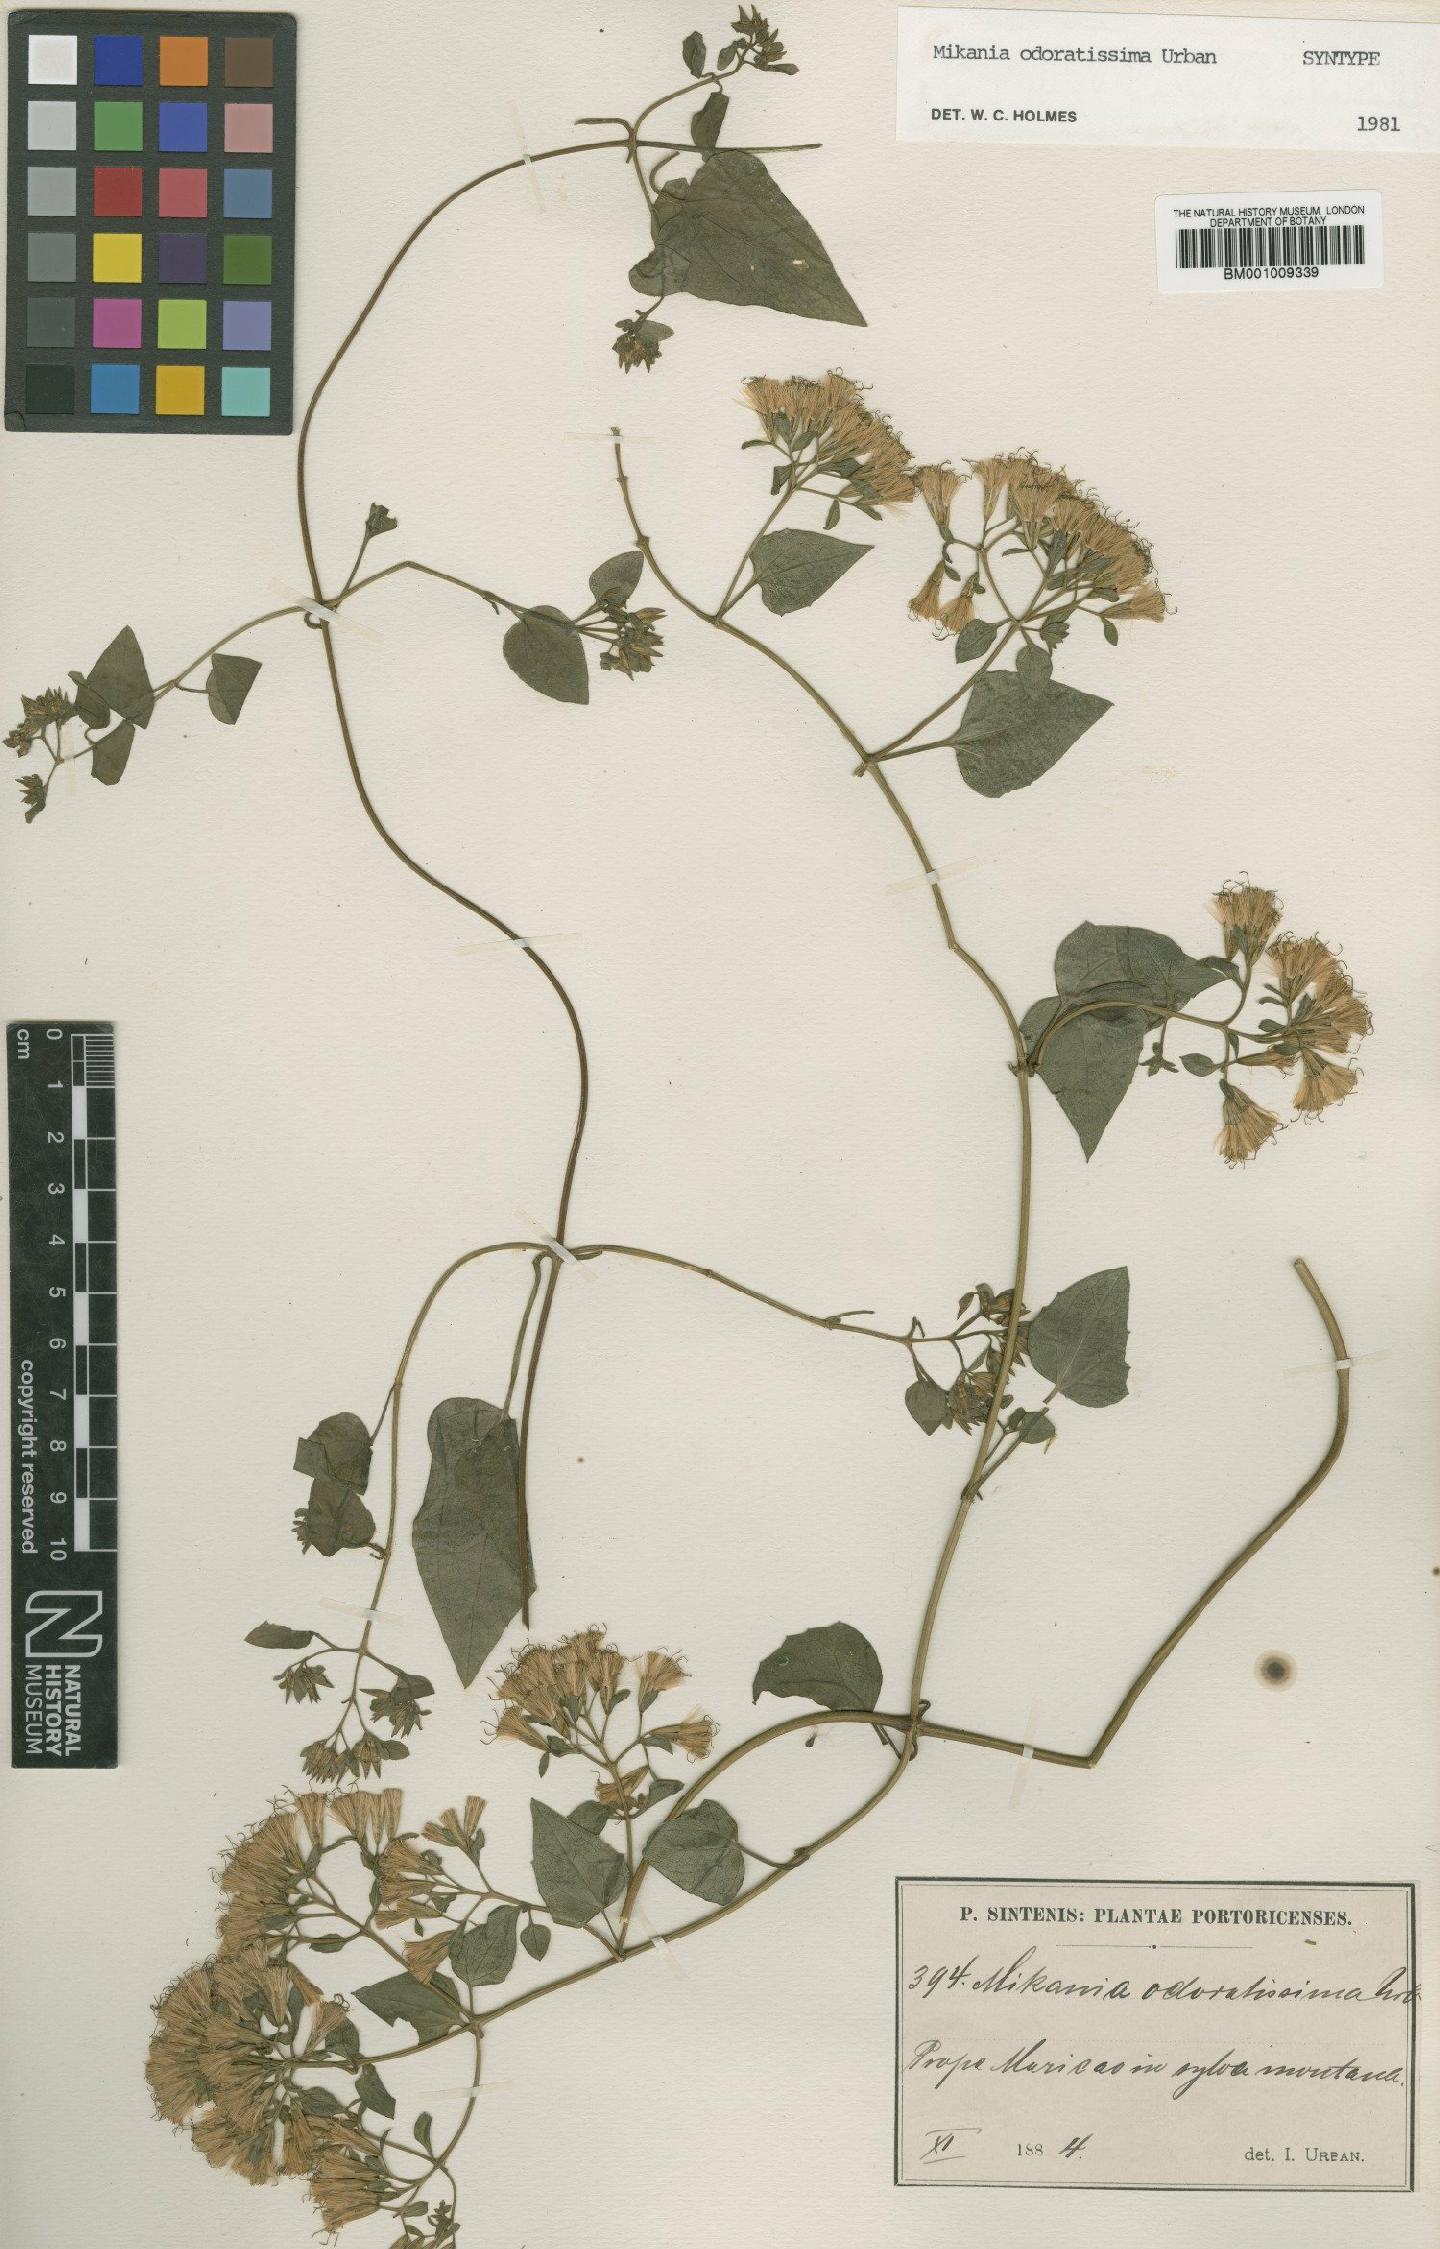 To NHMUK collection (Mikania odoratissima Urb.; Syntype; NHMUK:ecatalogue:572693)